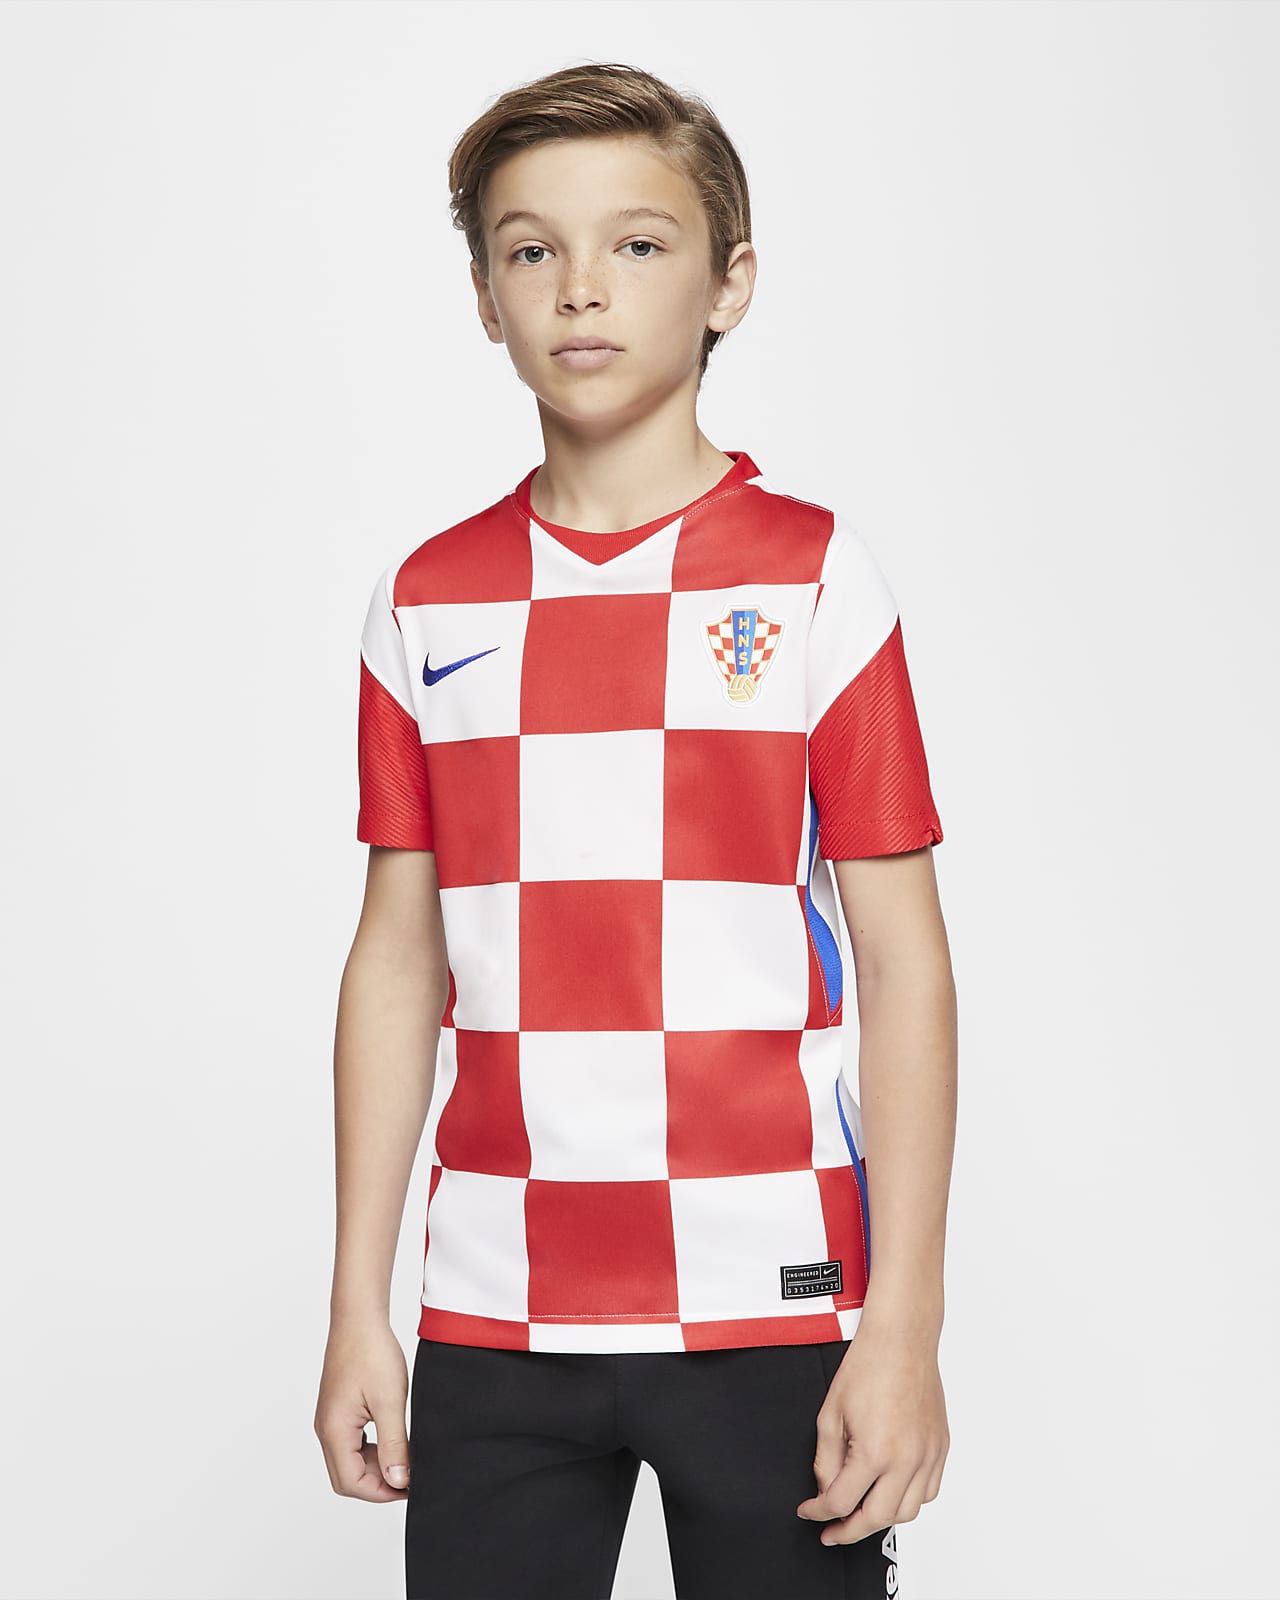 croatia soccer jersey 2020